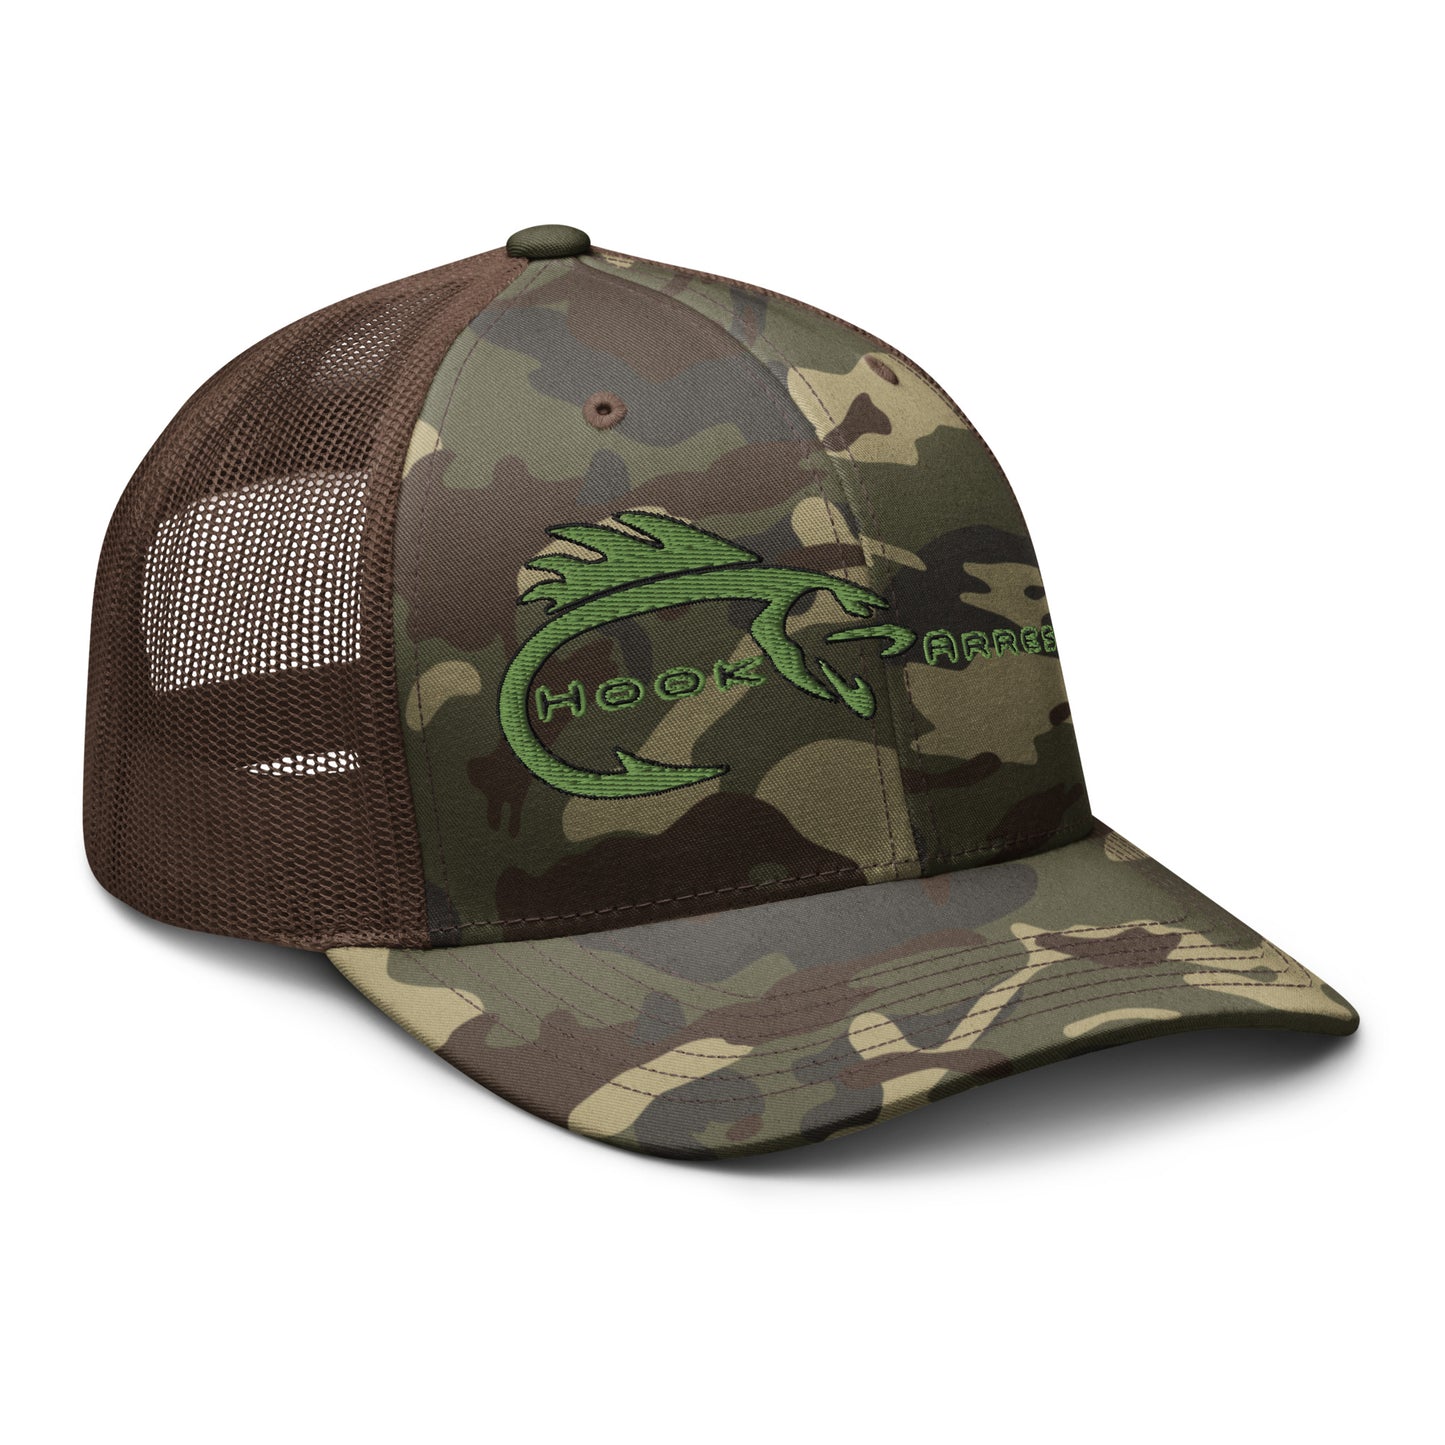 Hook Arrest Camouflage trucker hat